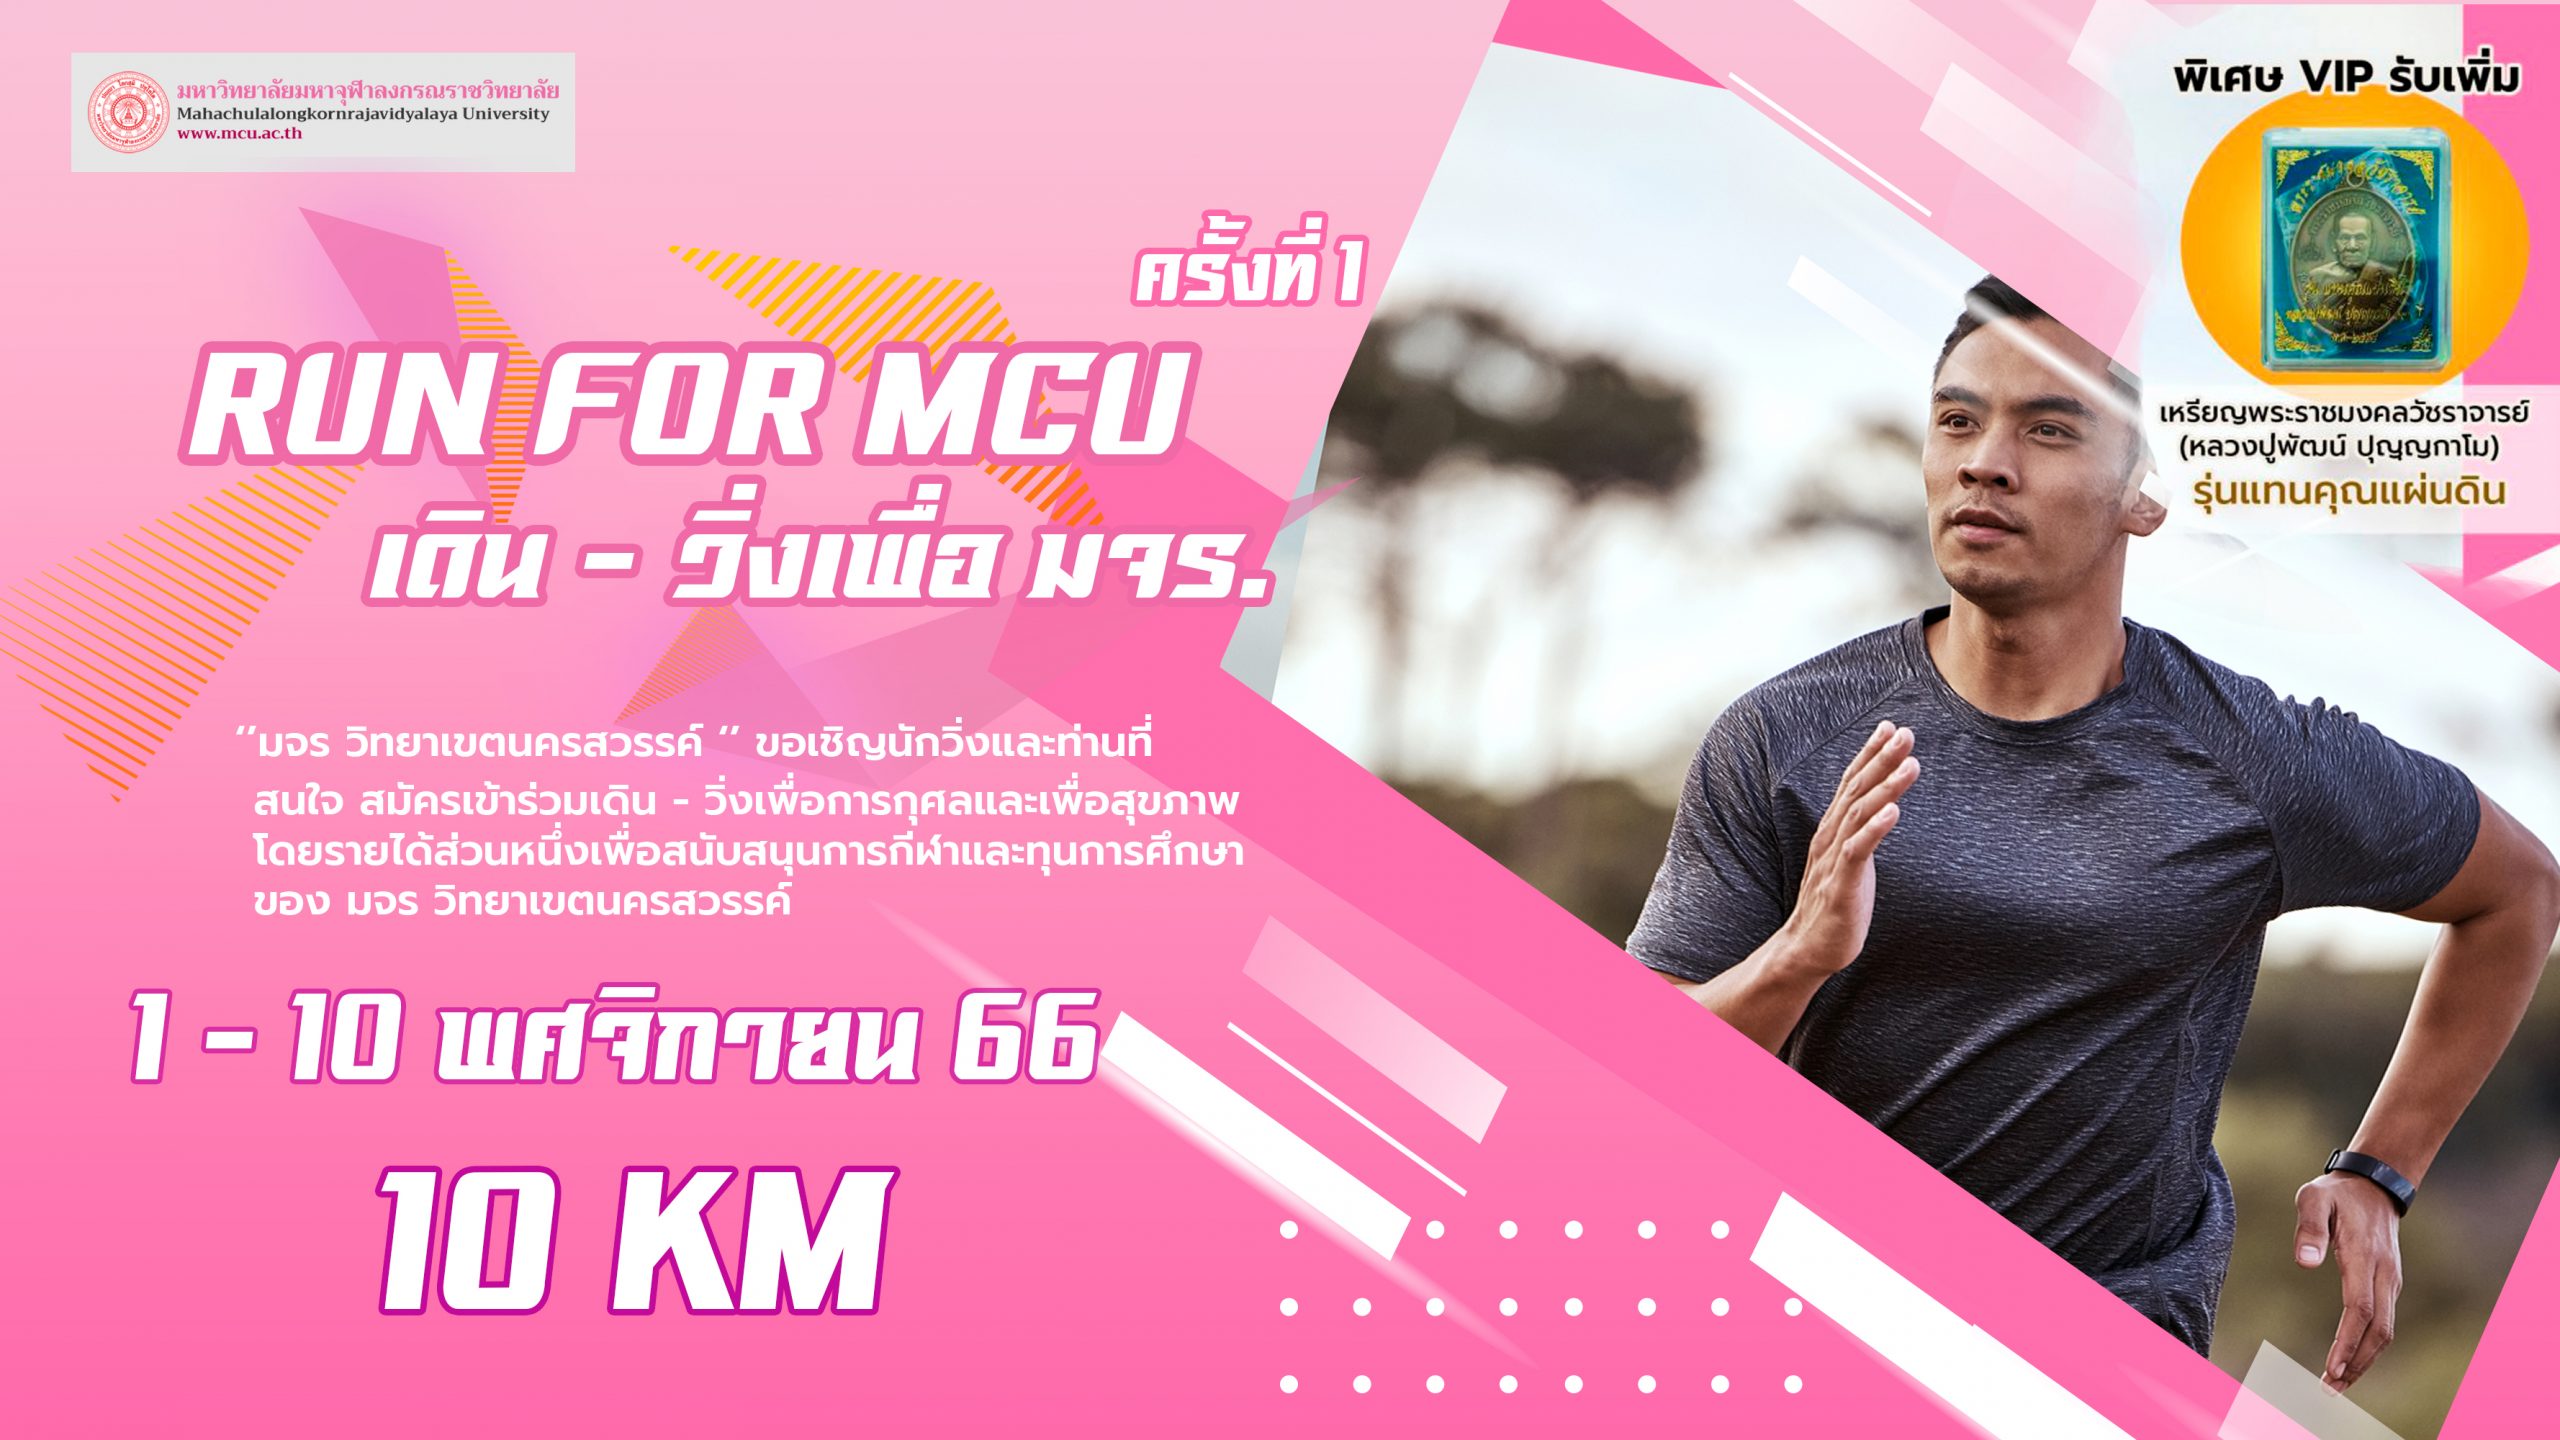 Run for MCU เดิน-วิ่งเพื่อมจร.